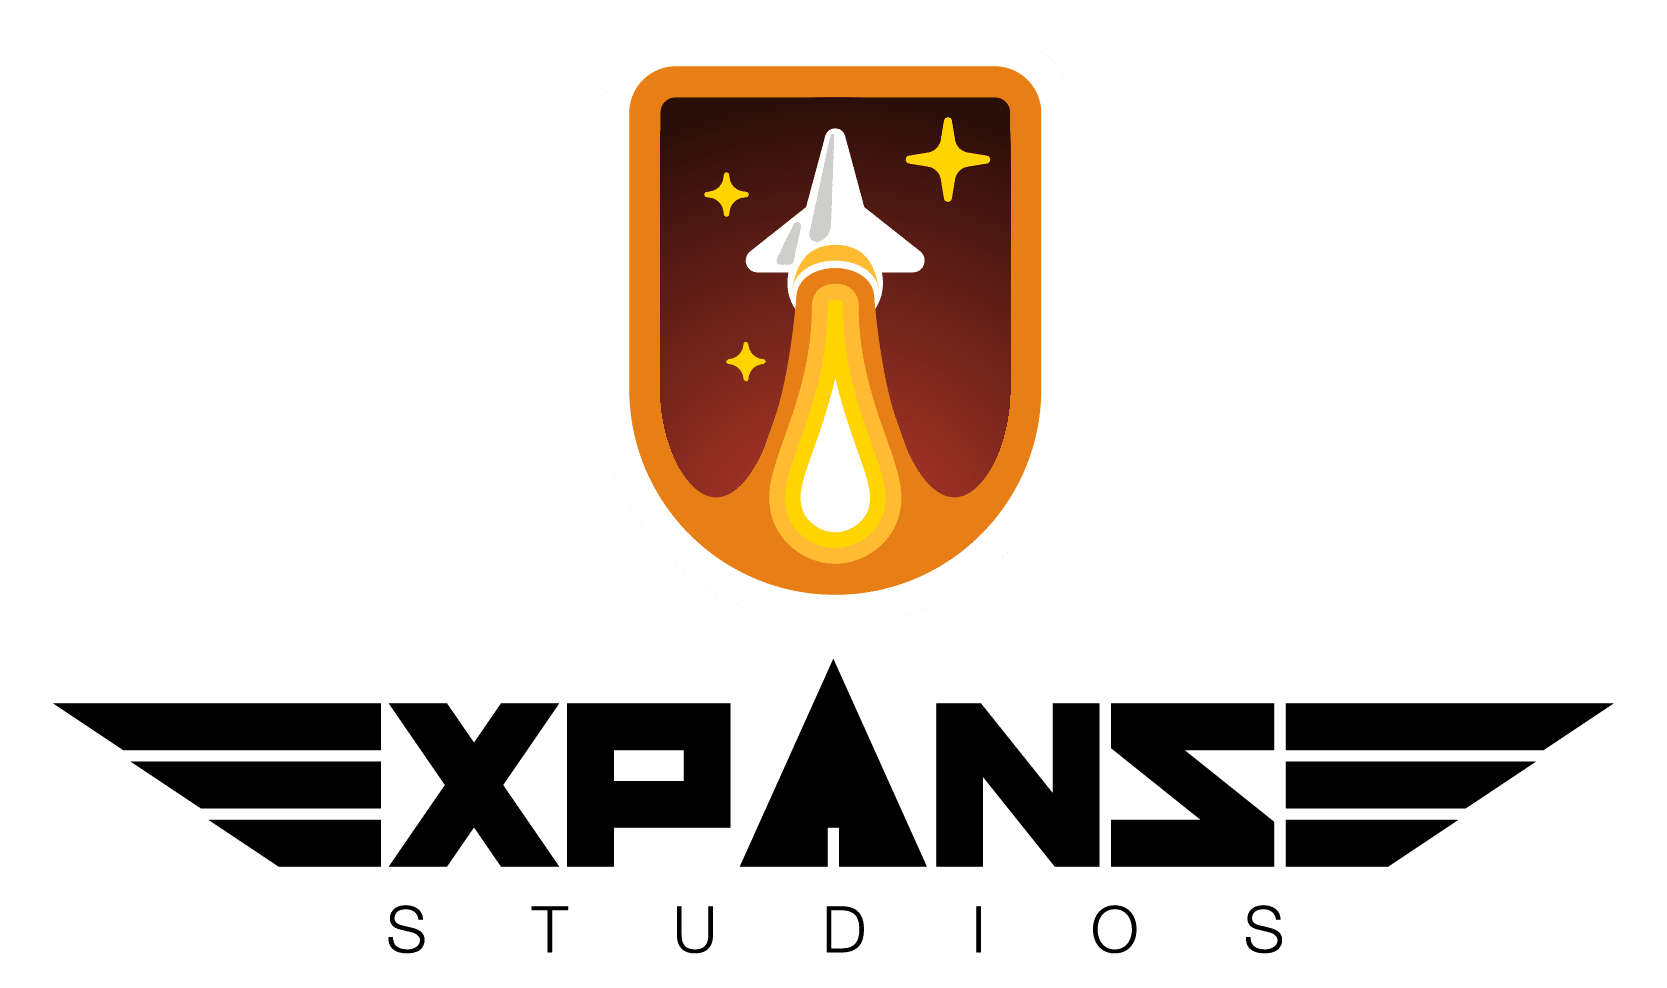 Expanse Studio